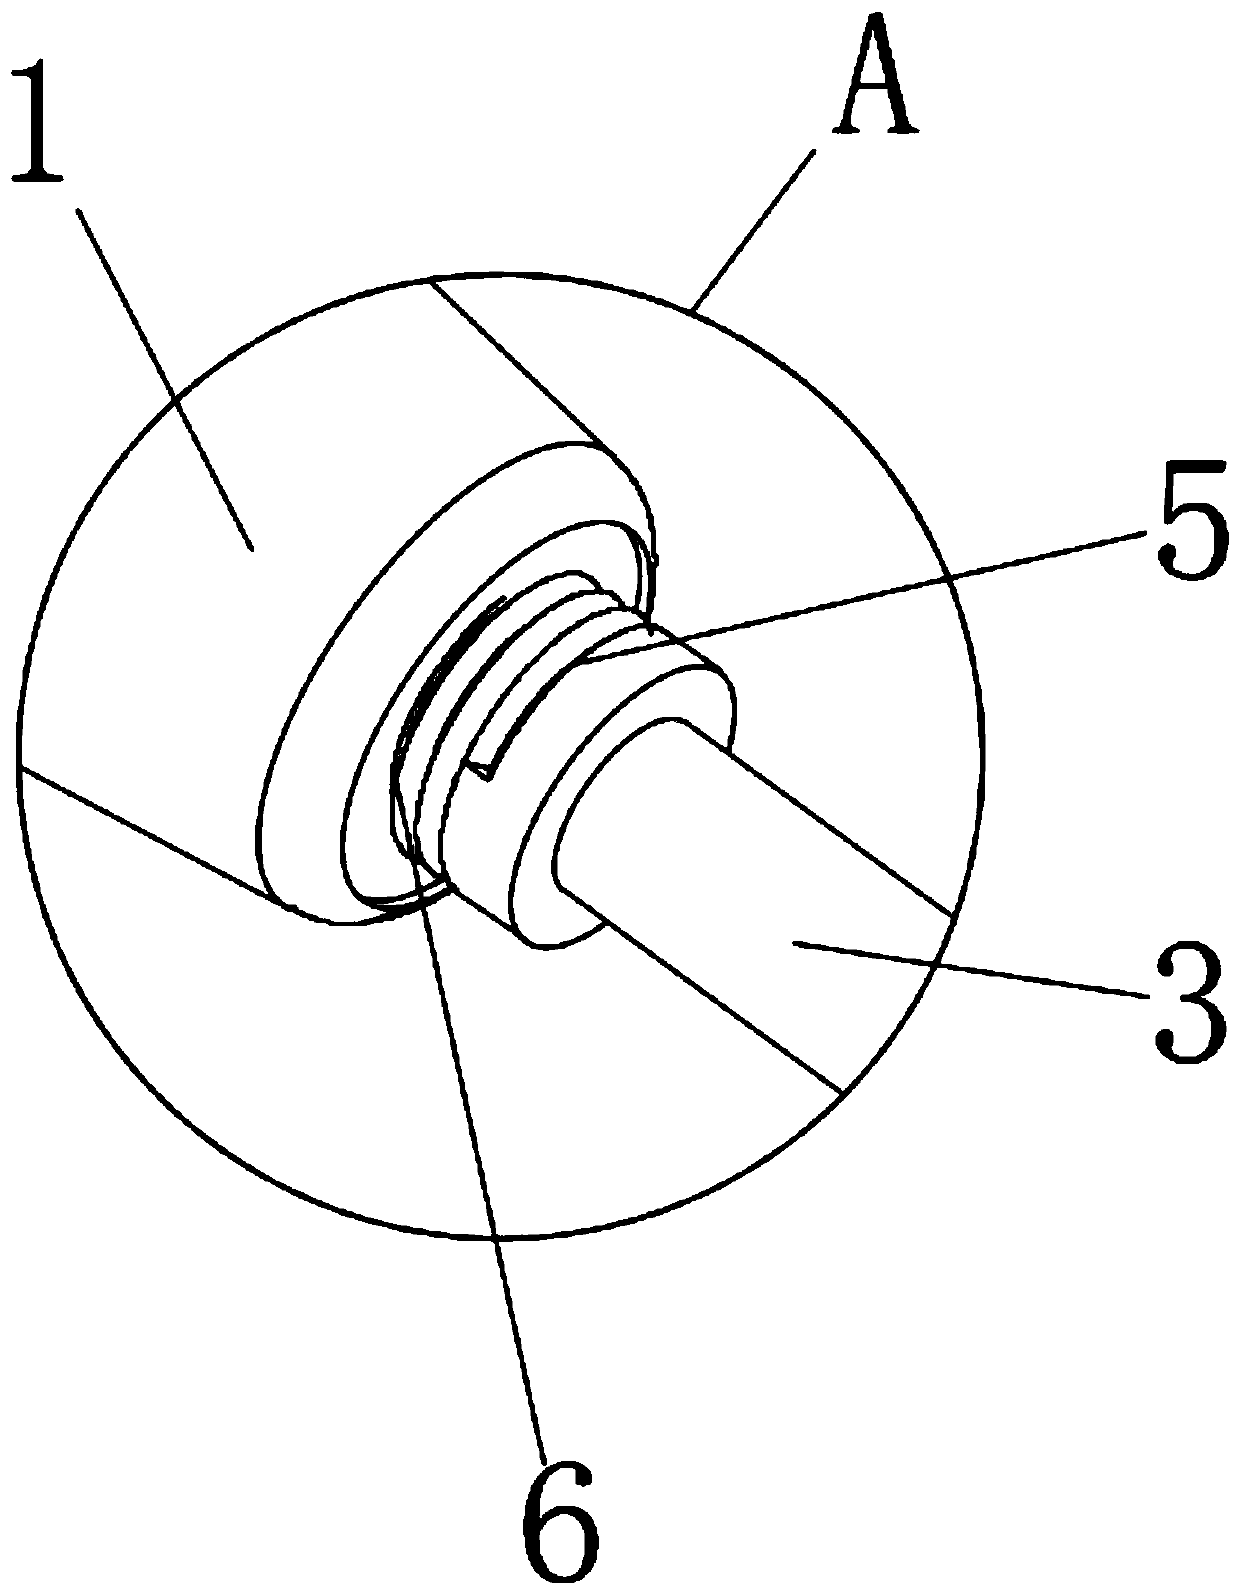 Manual tape threading device